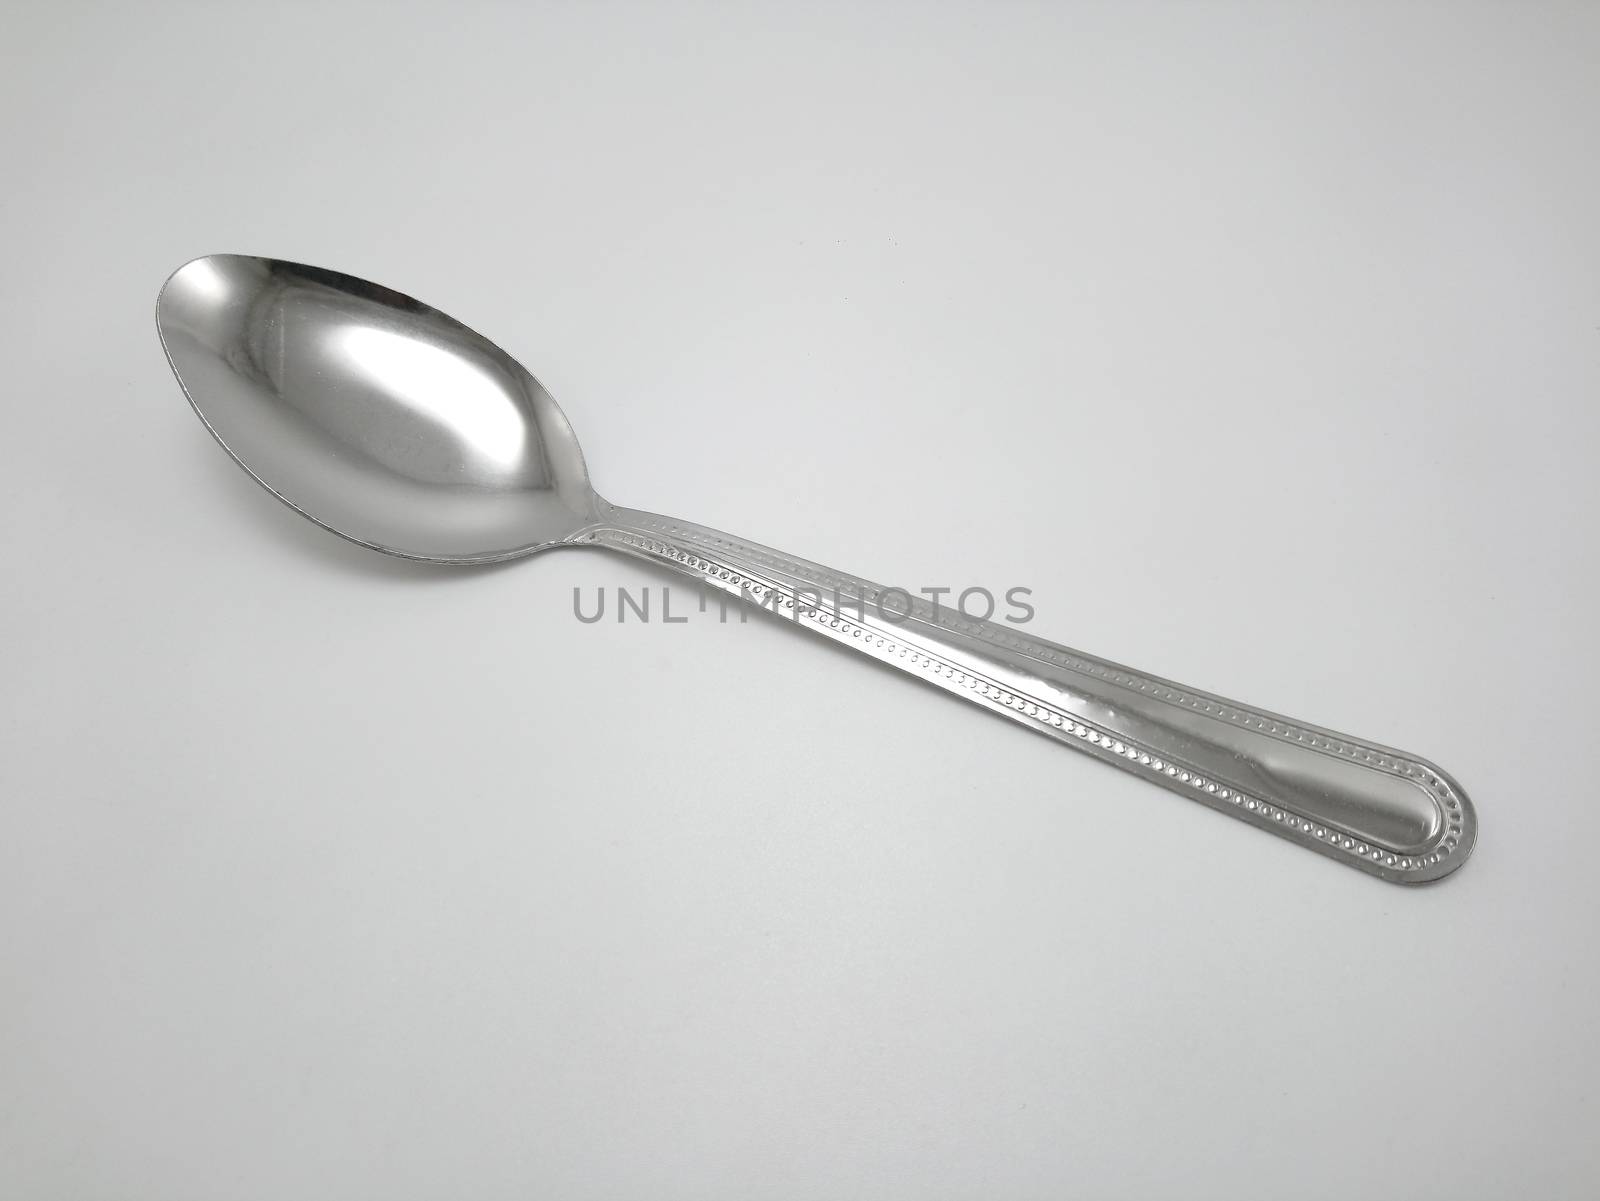 Stainless steel metal eating utensil spoon use for eating food meal